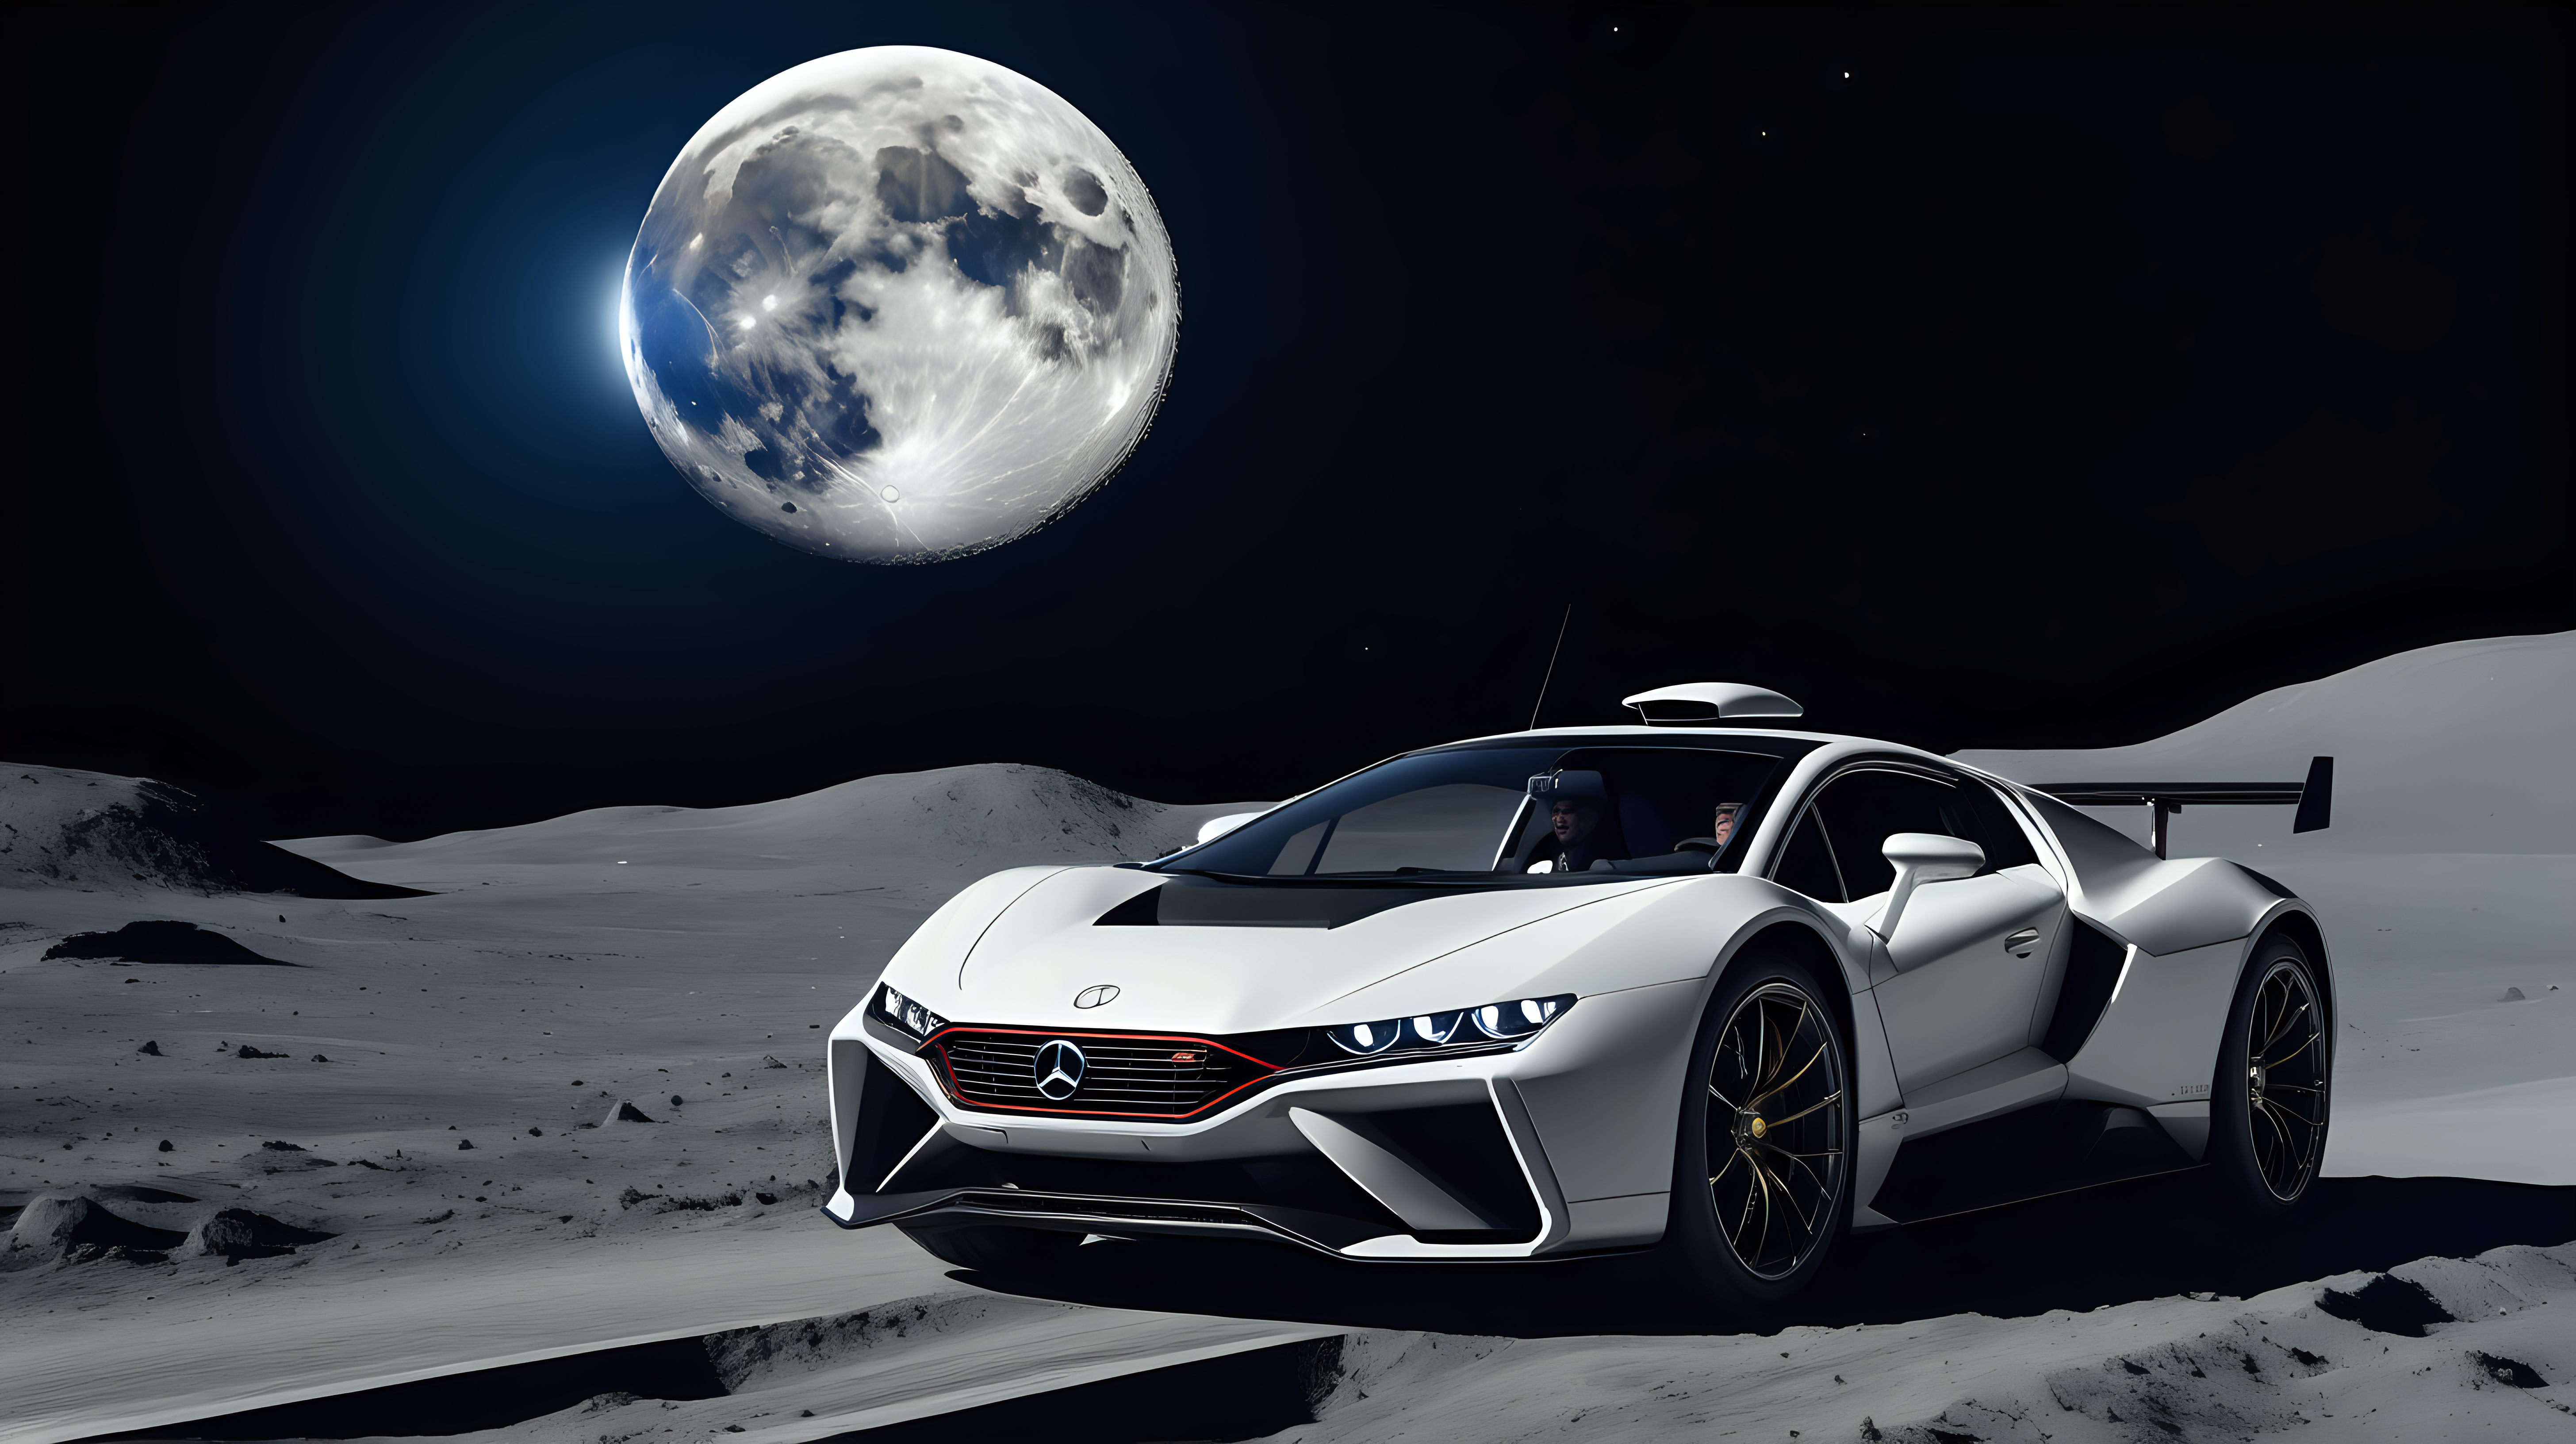 European sports car driving on the Moon